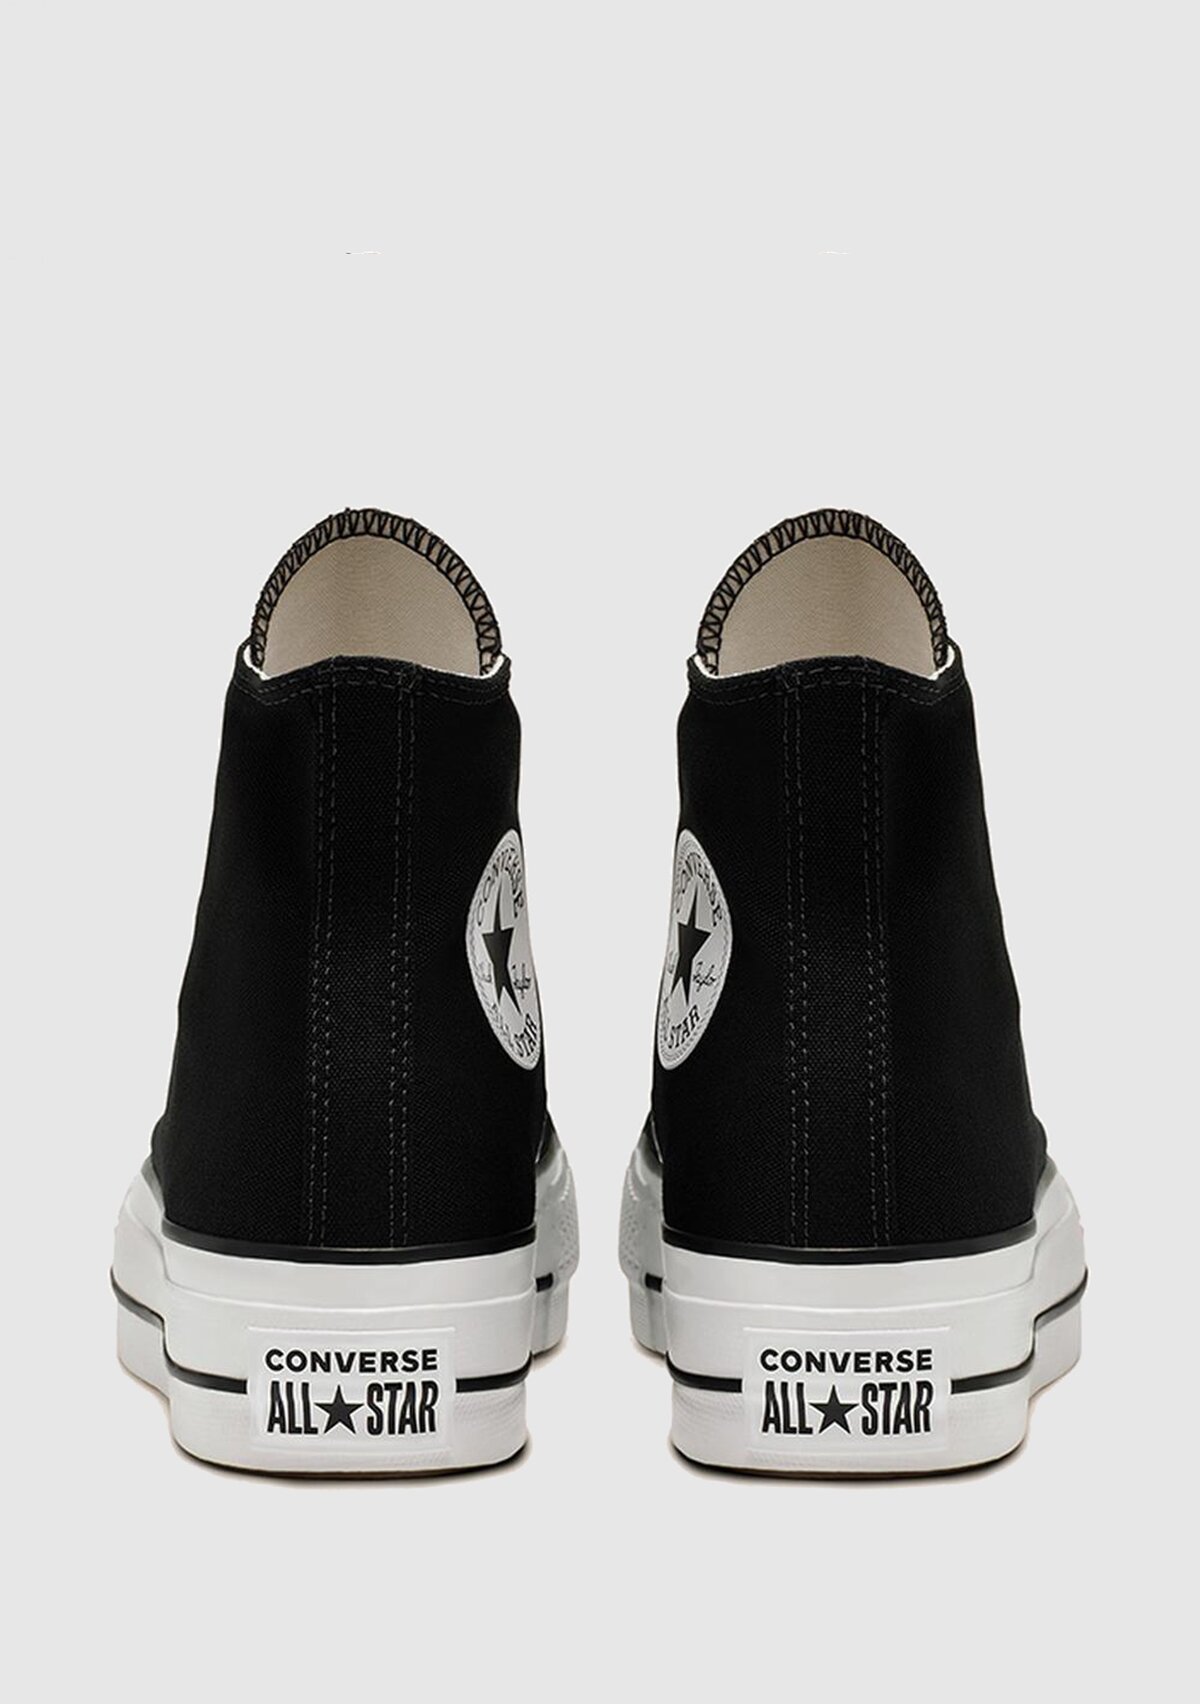 Converse Chuck Taylor All Star Platform Canvas Siyah Kadın Sneaker 560845C 